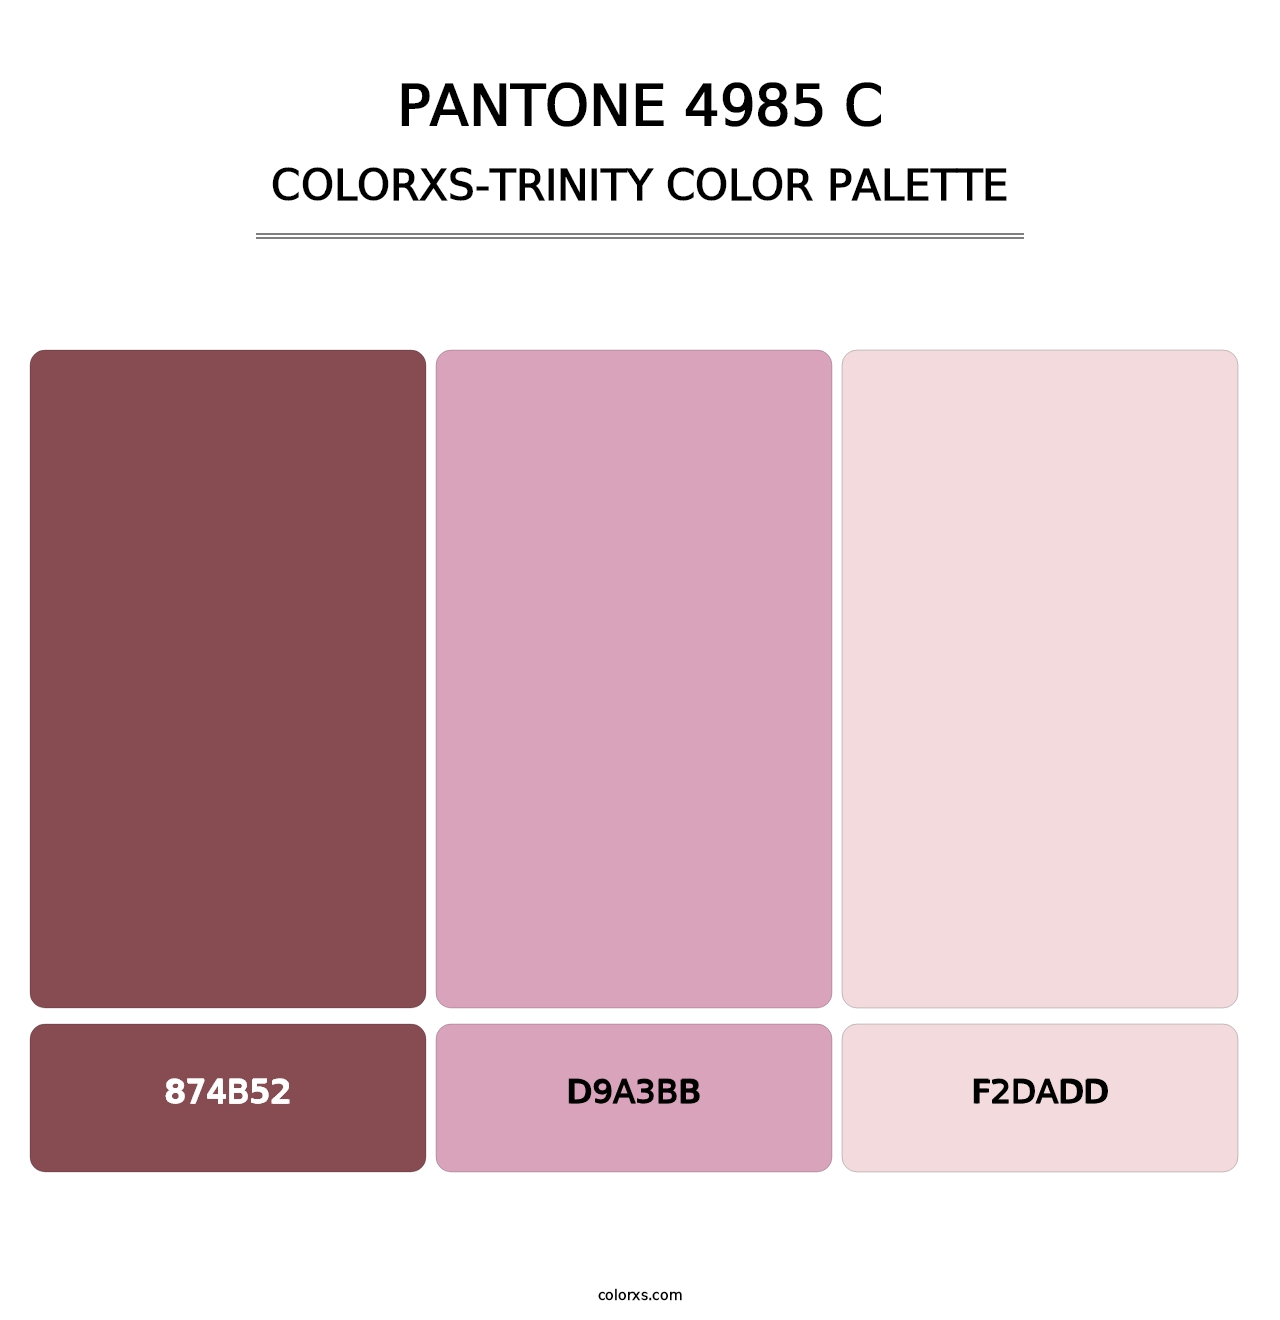 PANTONE 4985 C - Colorxs Trinity Palette